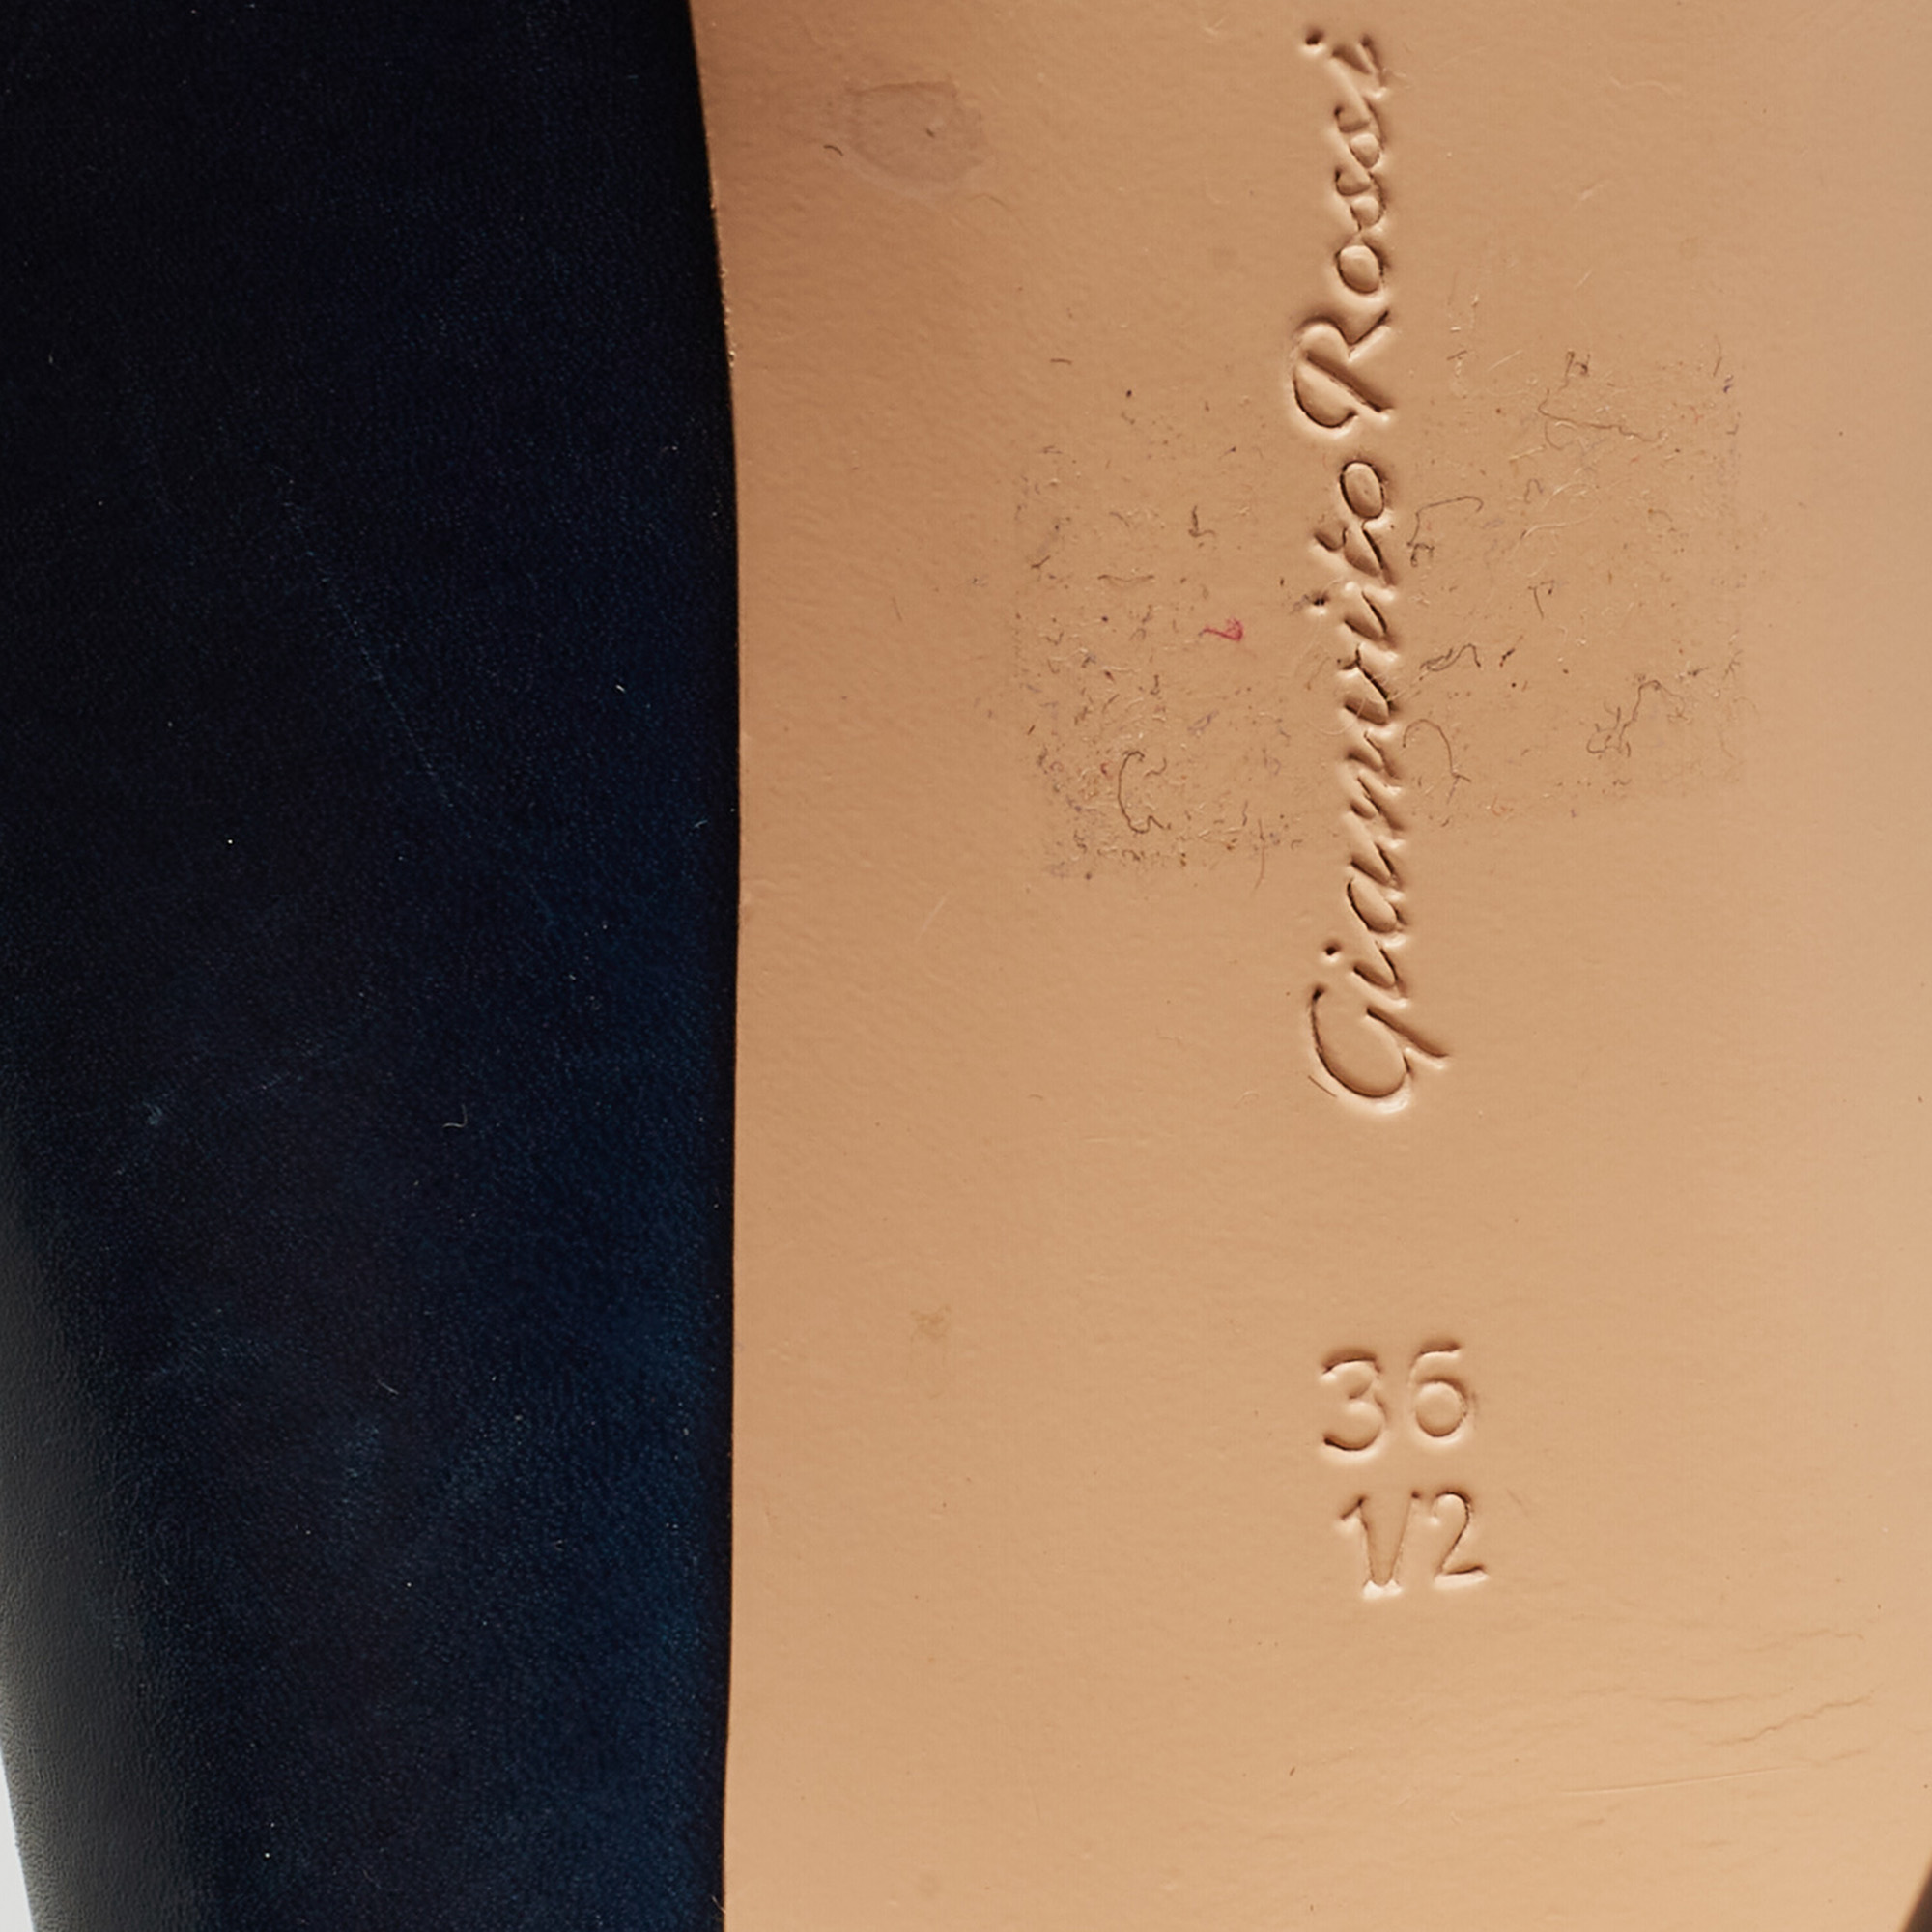 Gianvito Rossi Blue/White Leather Peep Toe Pumps Size 36.5